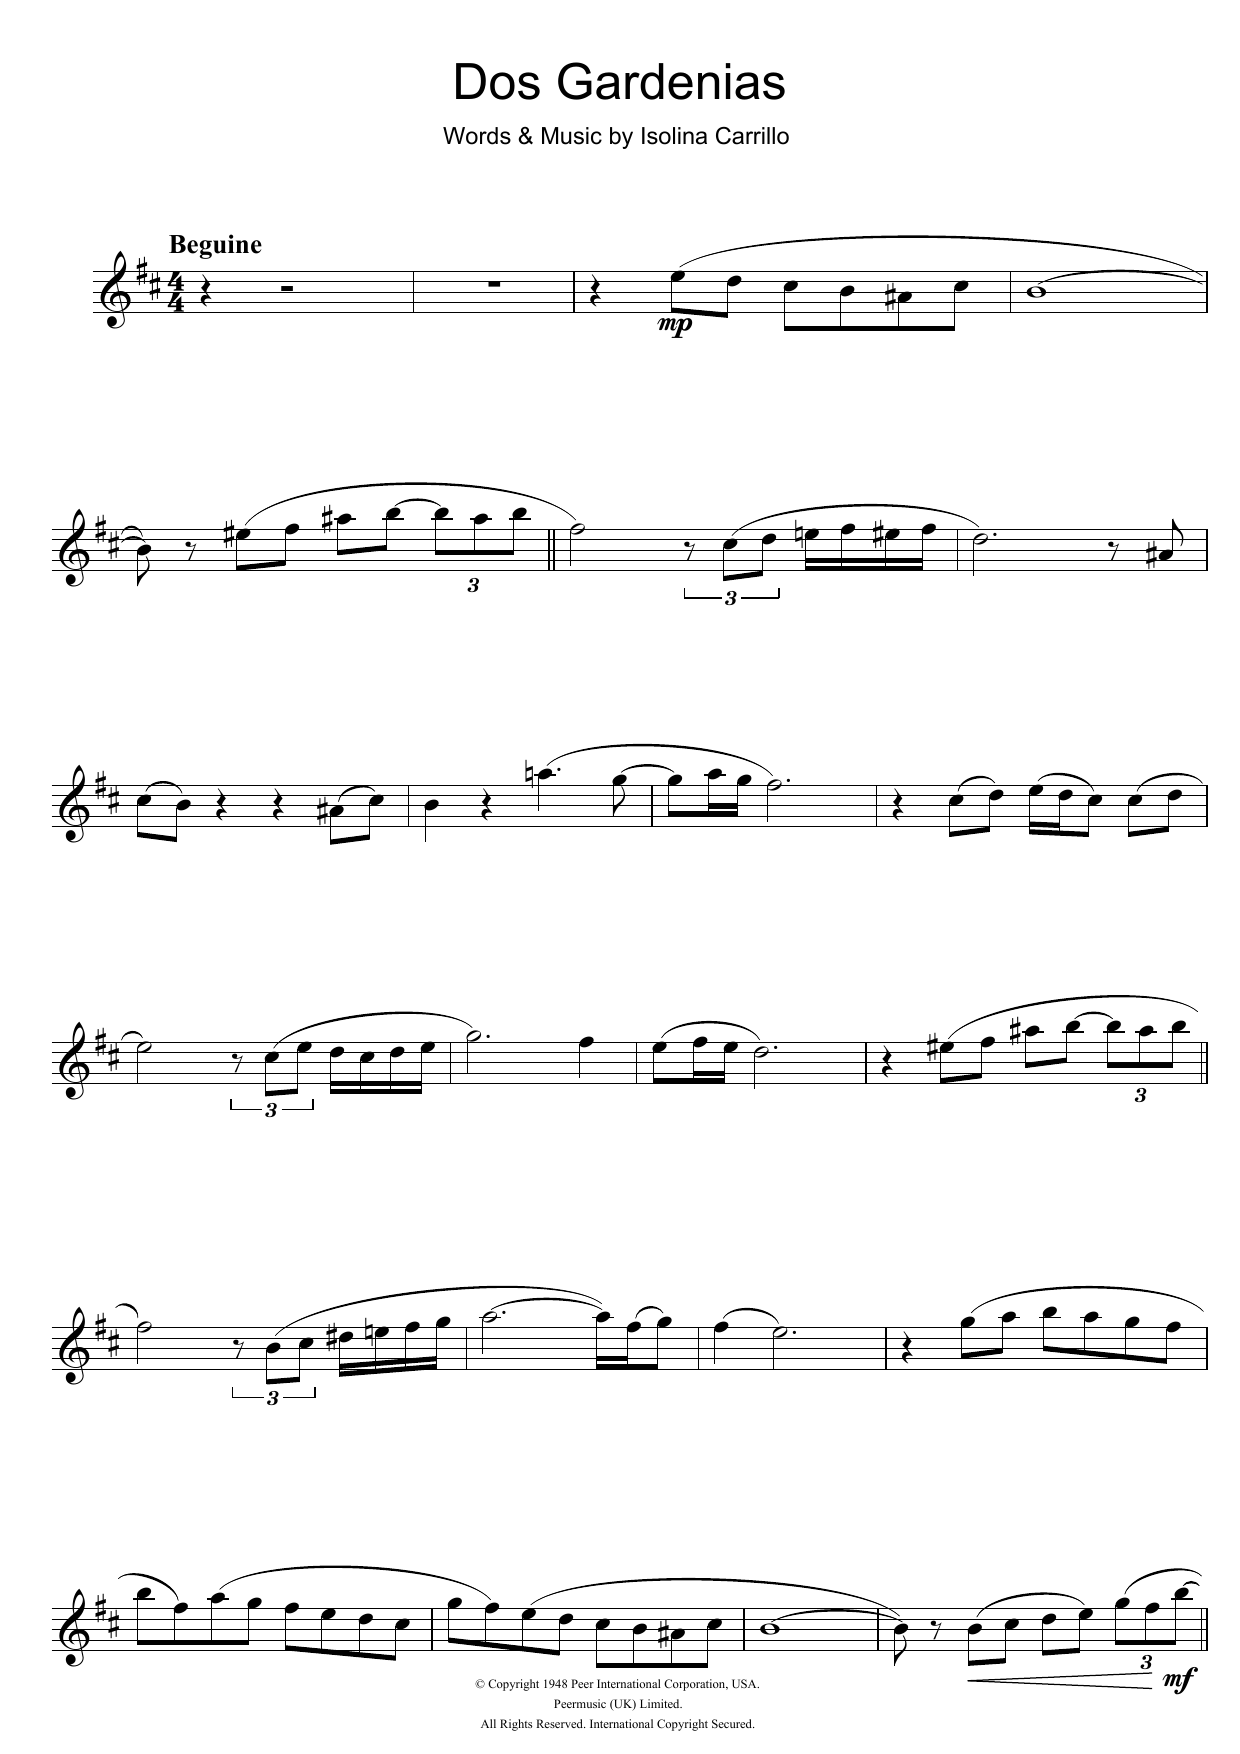 Buena Vista Social Club Dos Gardenias Sheet Music Notes & Chords for Flute - Download or Print PDF